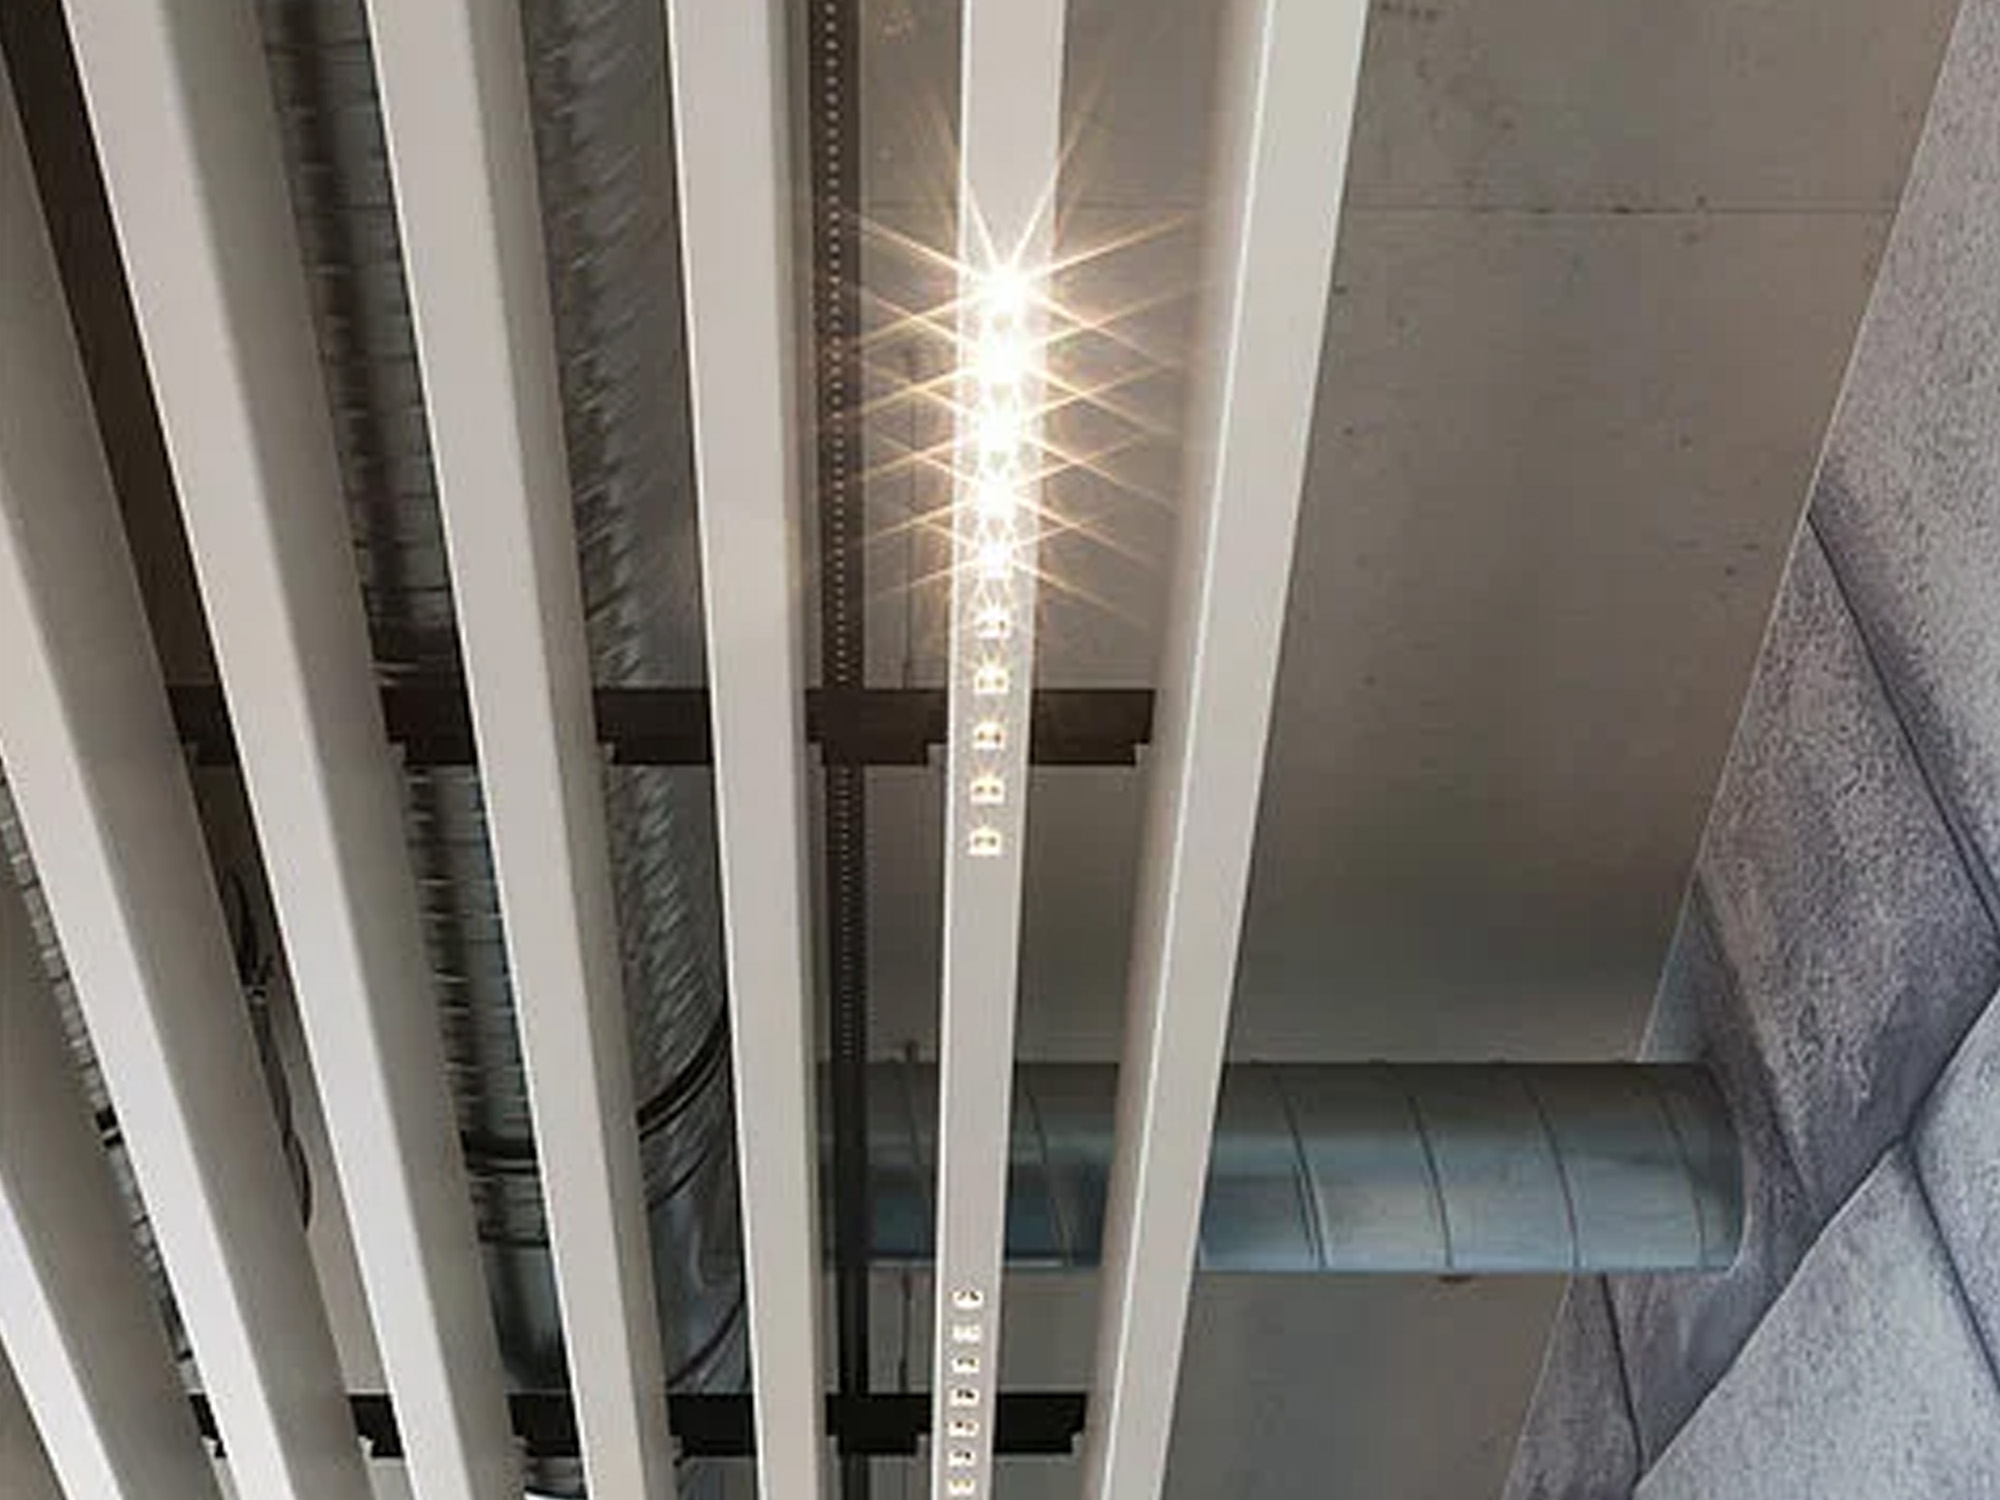 Vanhout.pro office Suspended False Ceiling Aluminum False Ceiling Panel Customized Ceiling